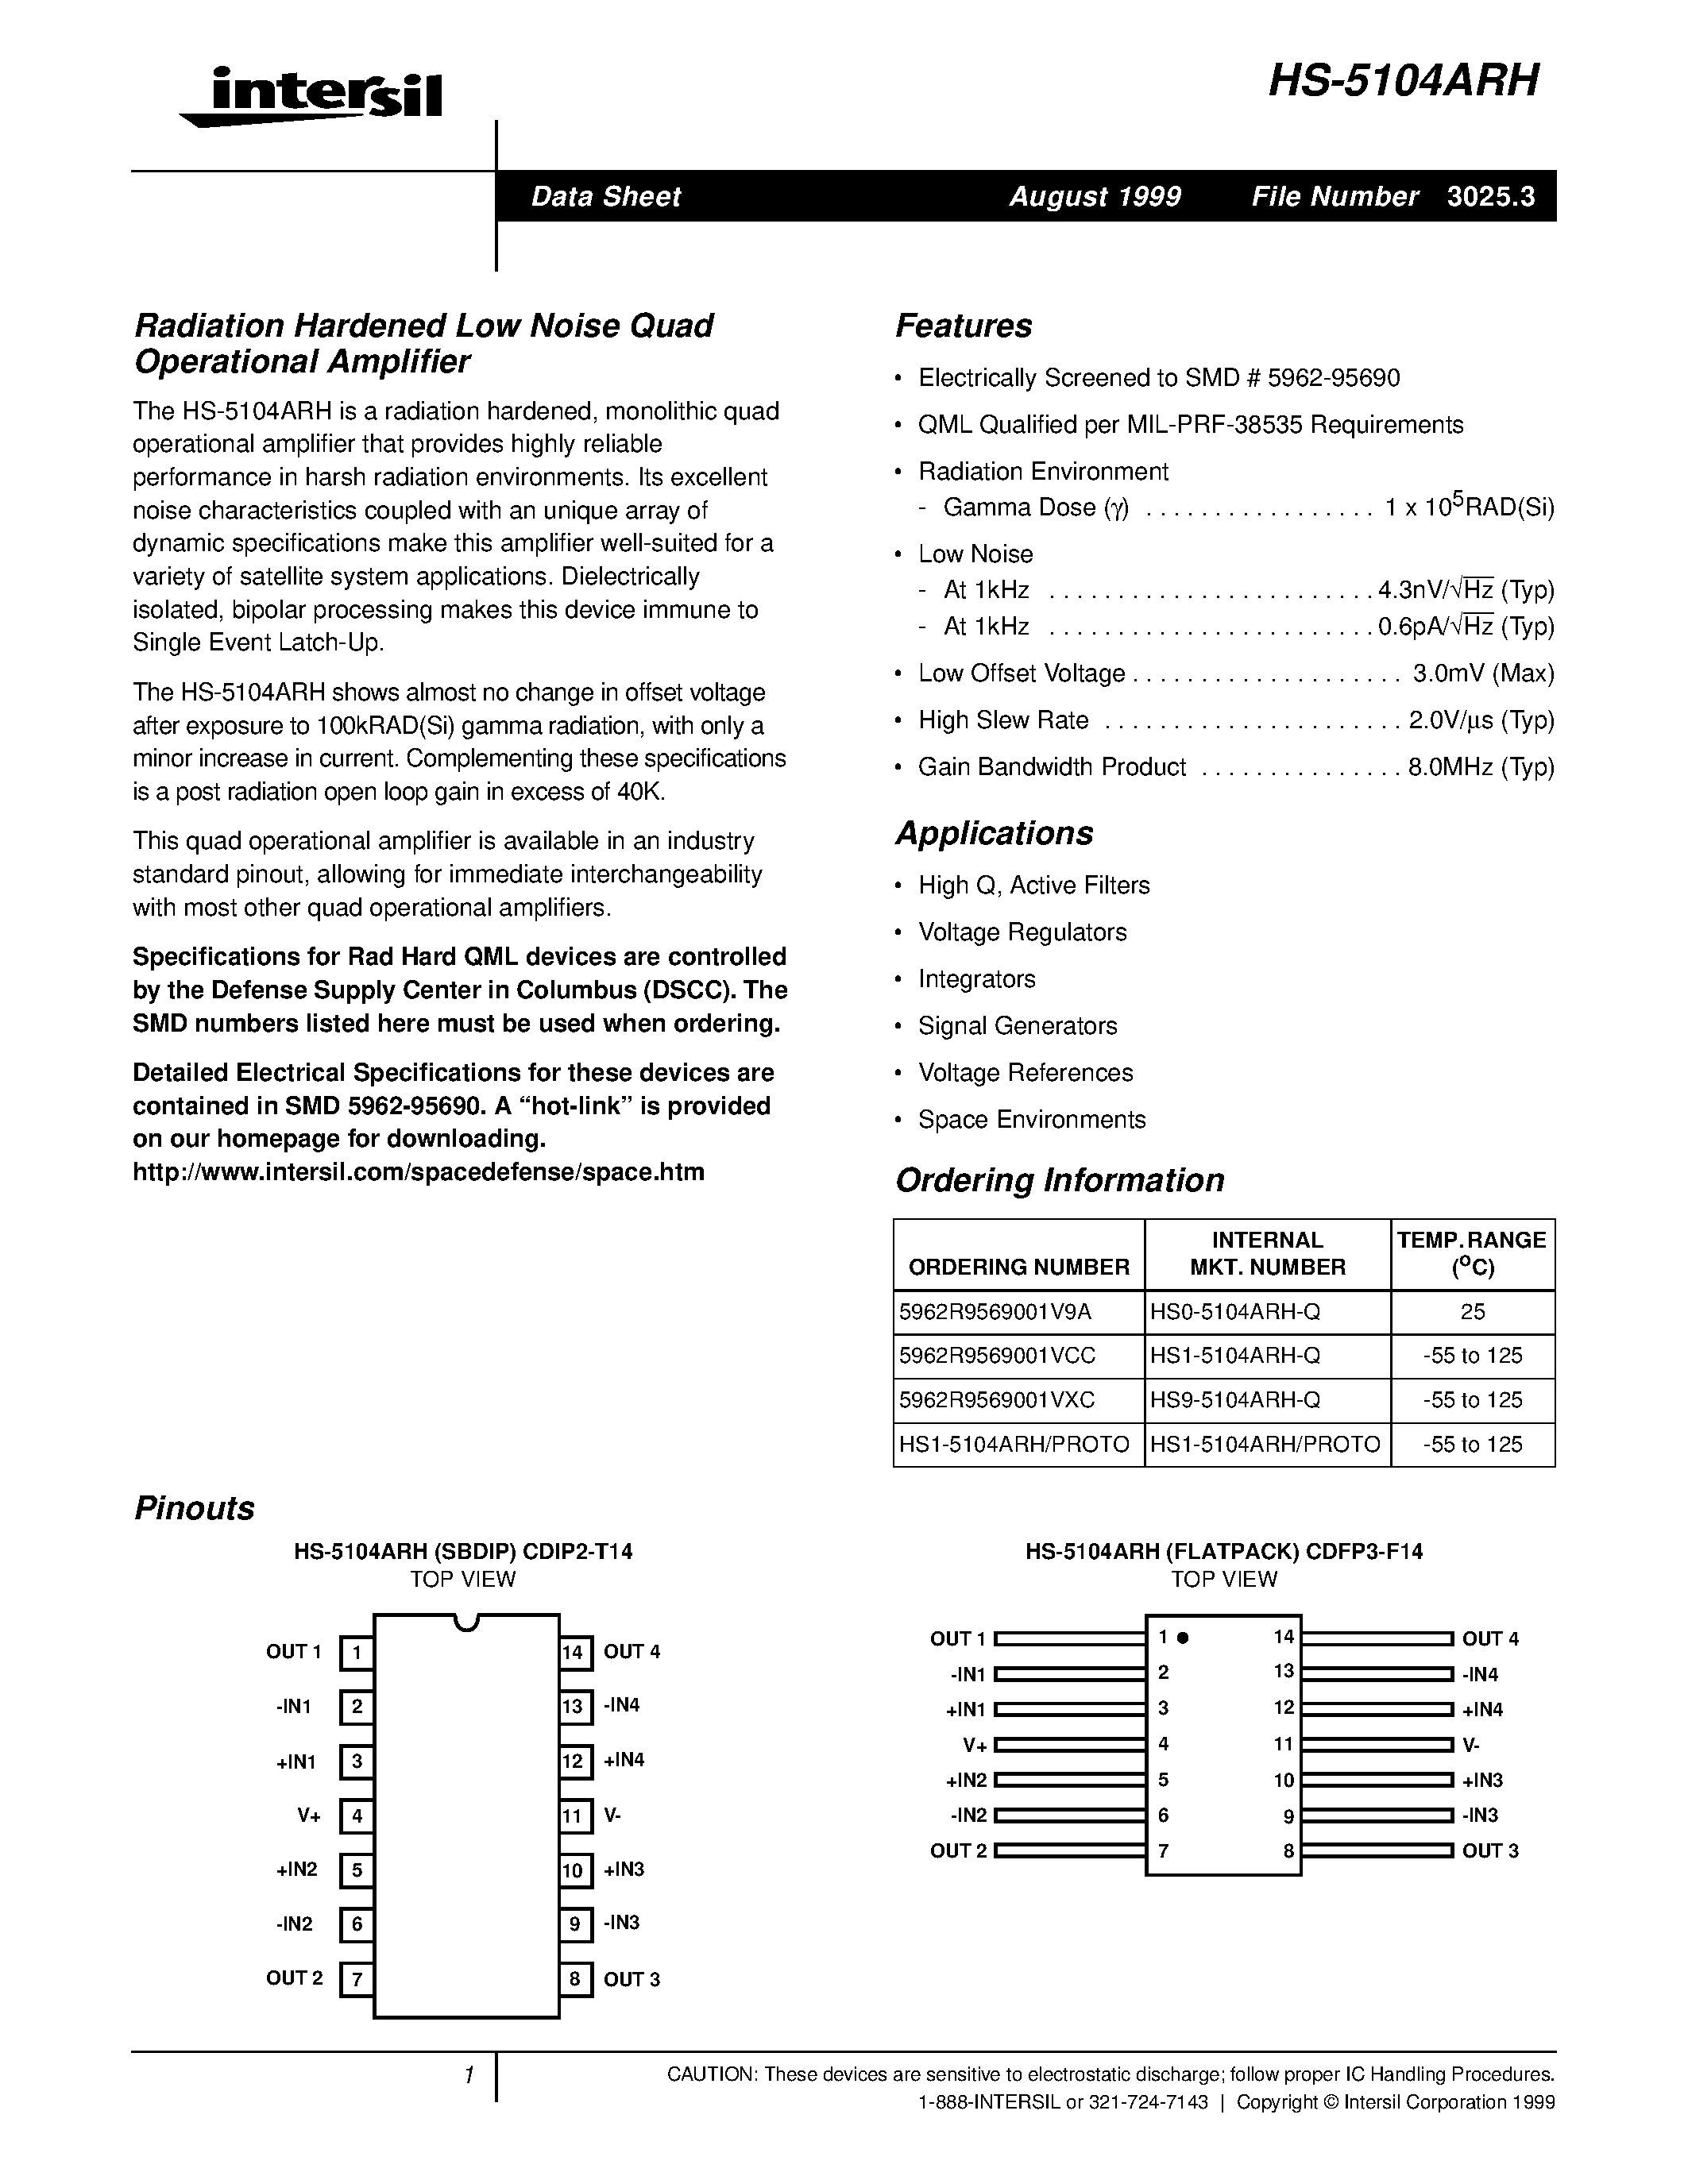 Datasheet HS0-5104ARH-Q - Radiation Hardened Low Noise Quad Operational Amplifier page 1